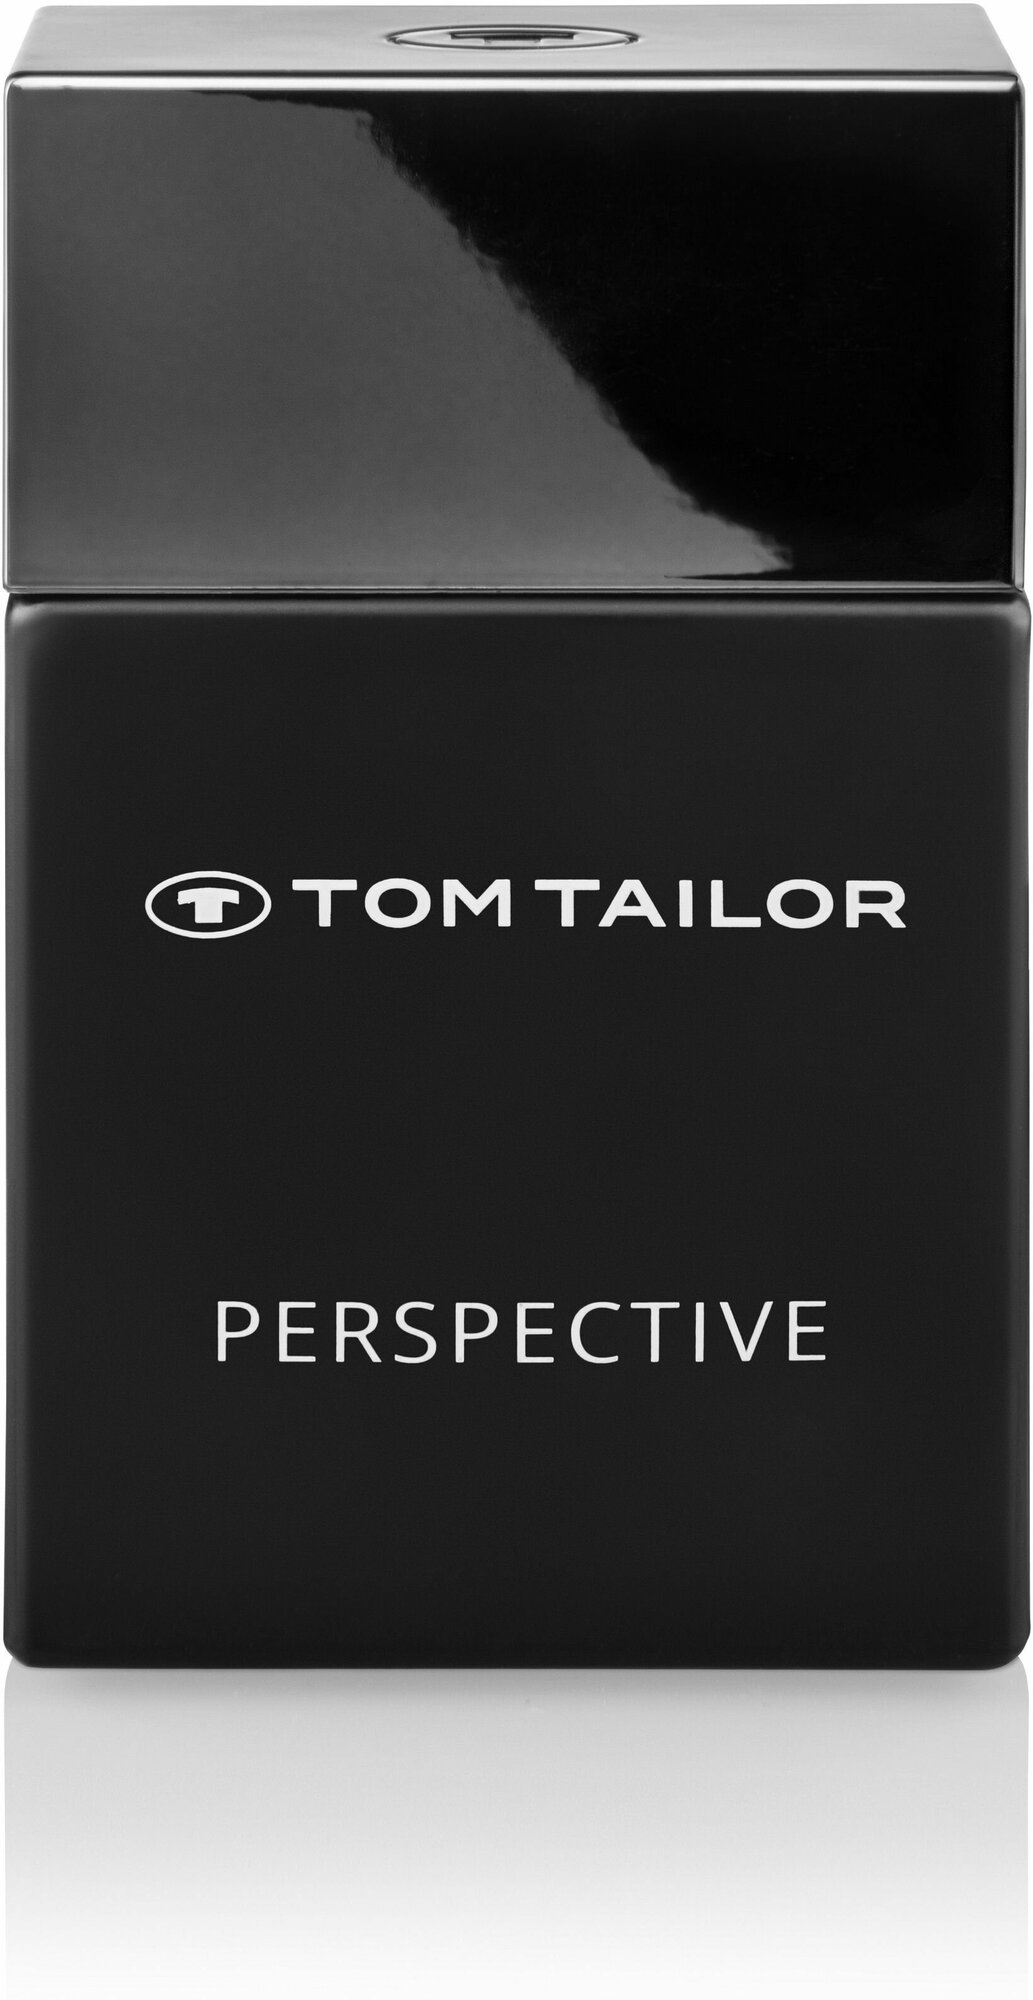 Tom Tailor Perspective Туалетная вода 30 мл